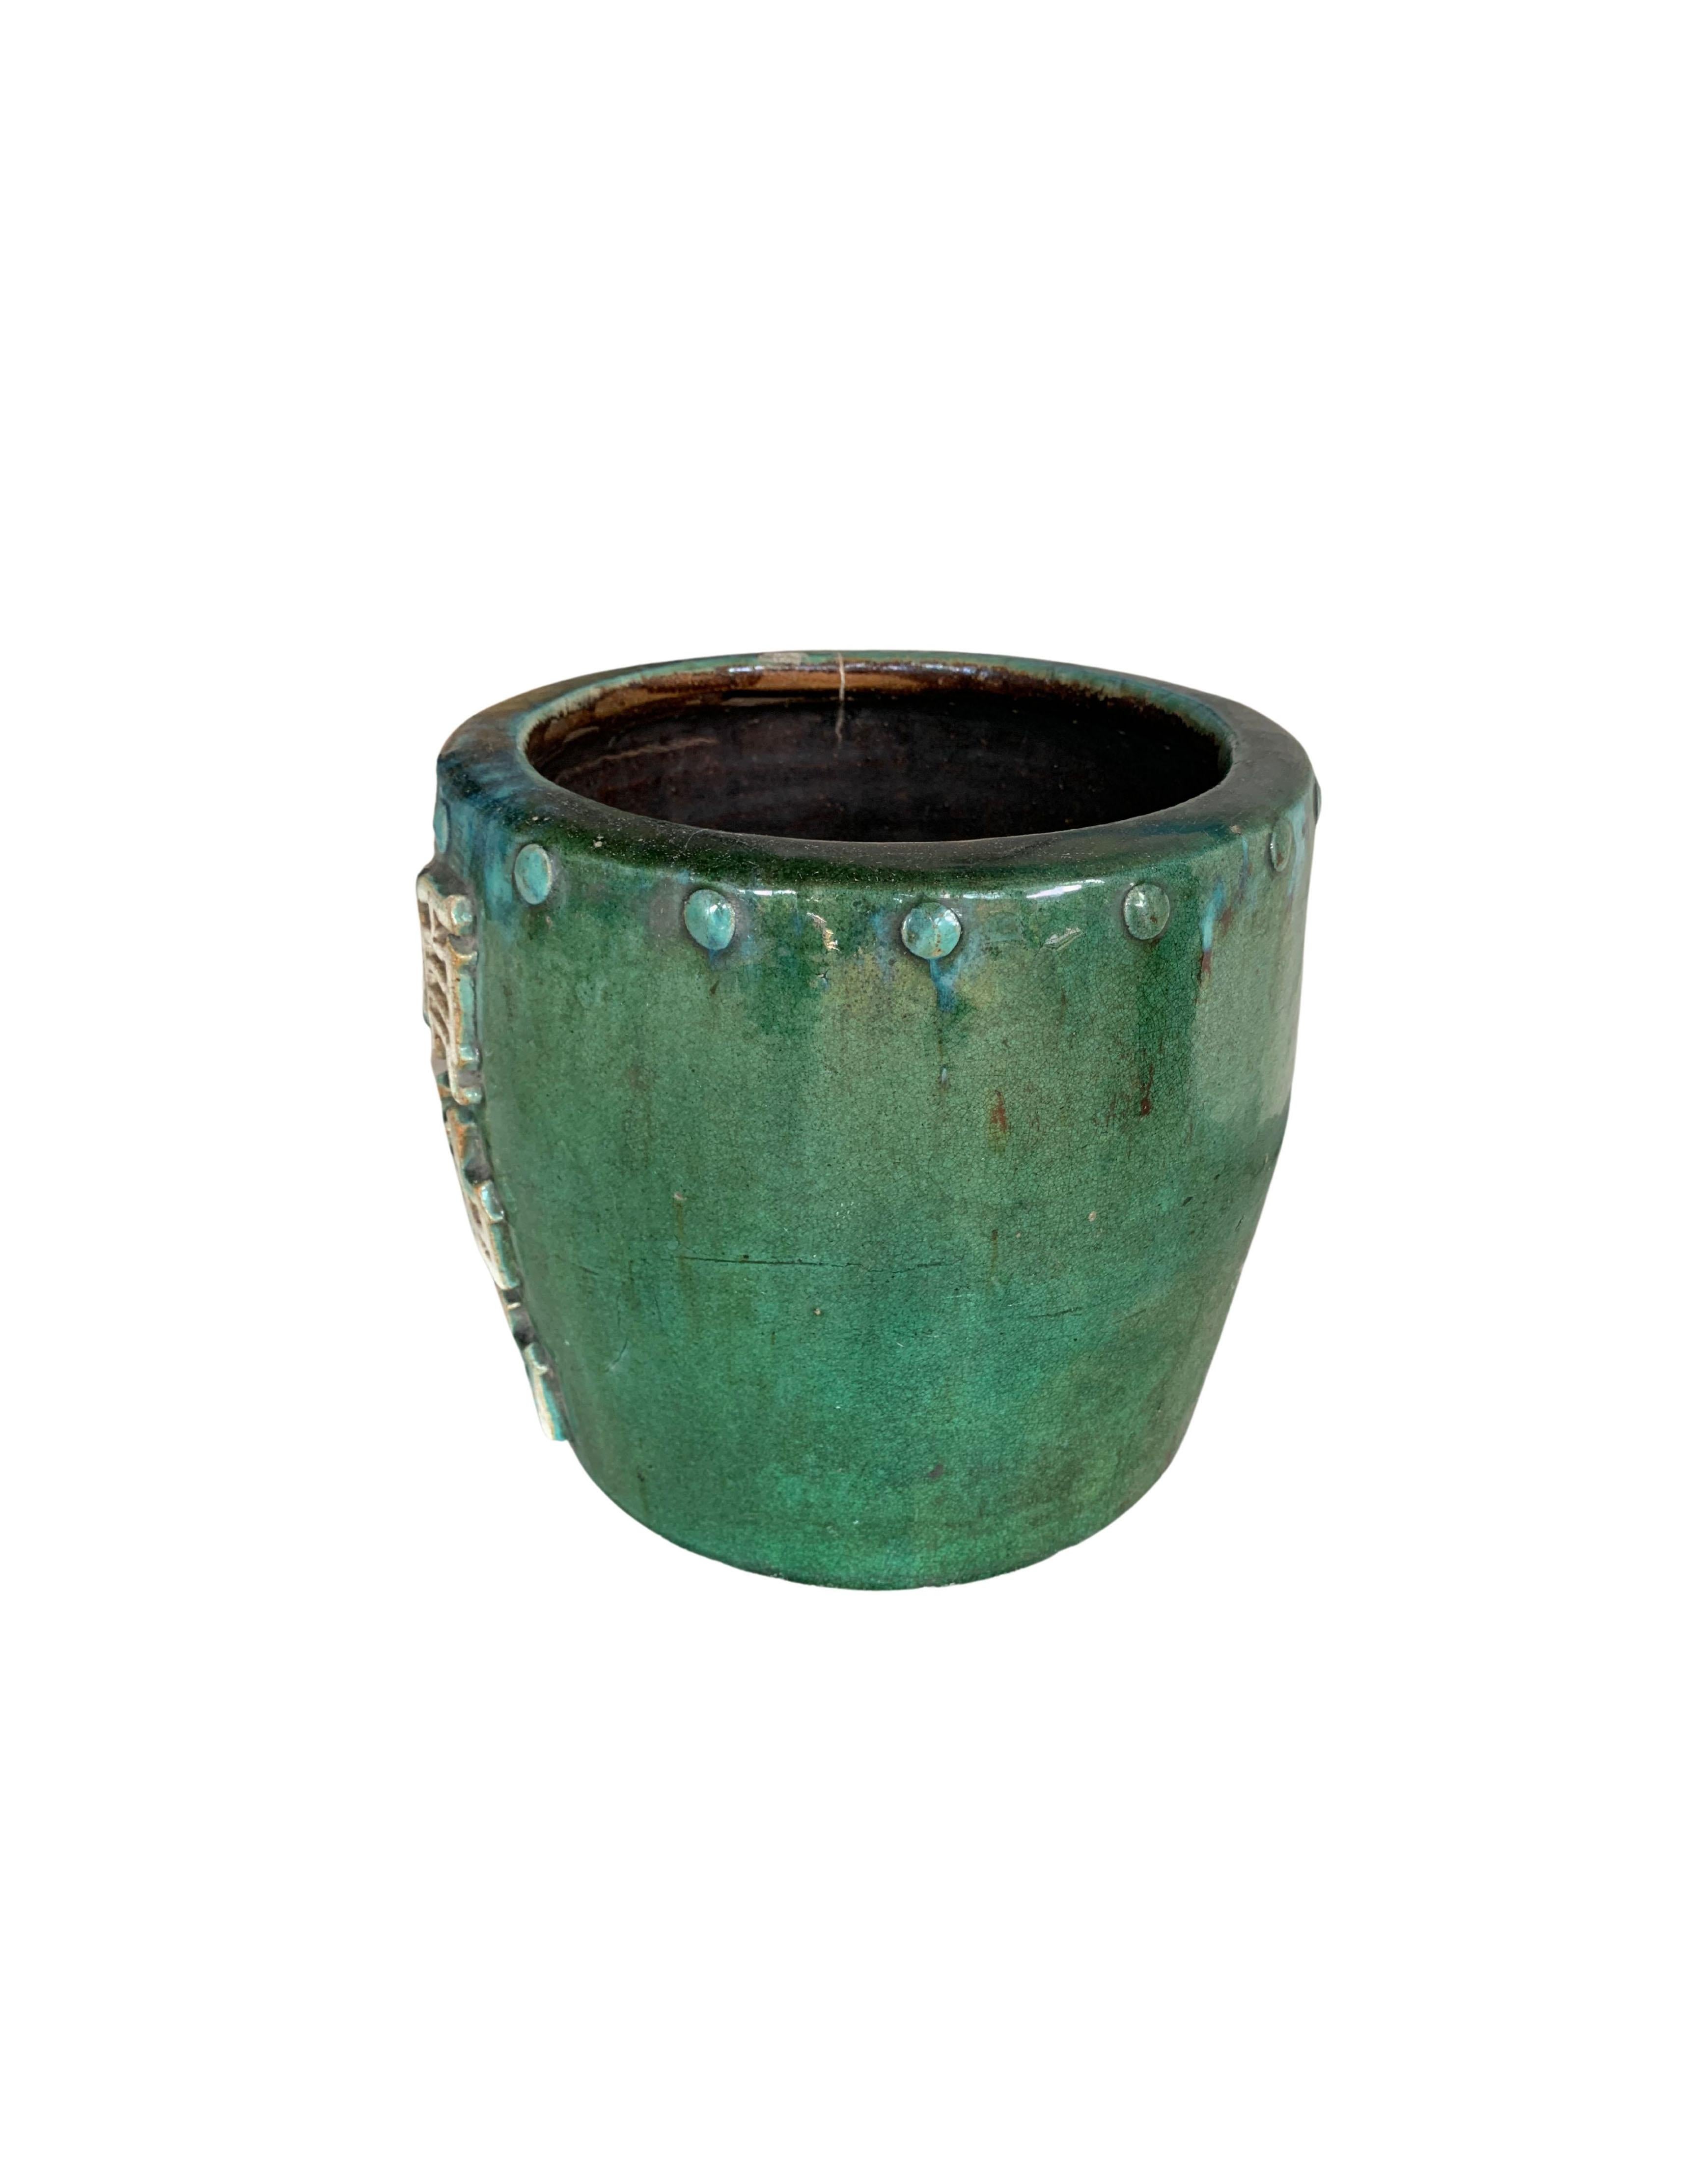 Qing Chinese Green Glazed Ceramic Oil Storage Jar / Planter, c. 1950 For Sale